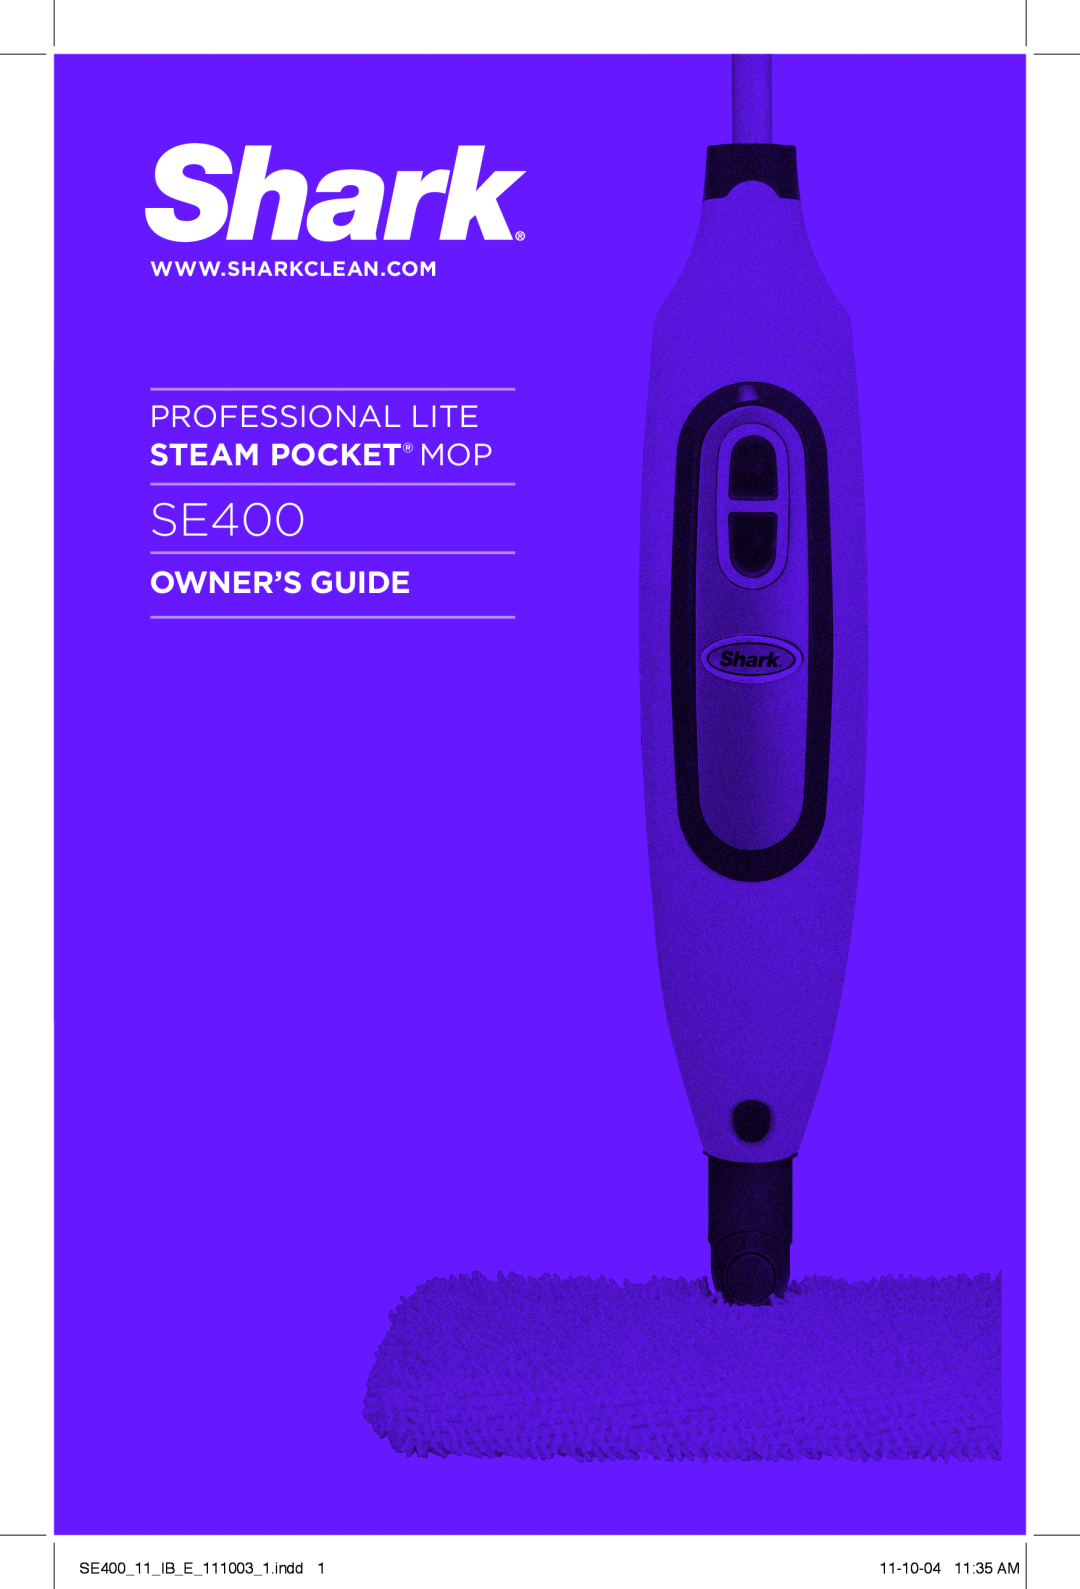 Shark manual Professional Lite Steam Pocket Mop, Owner’S Guide, SE40011IBE1110031.indd, 11-10-04 1135 AM 